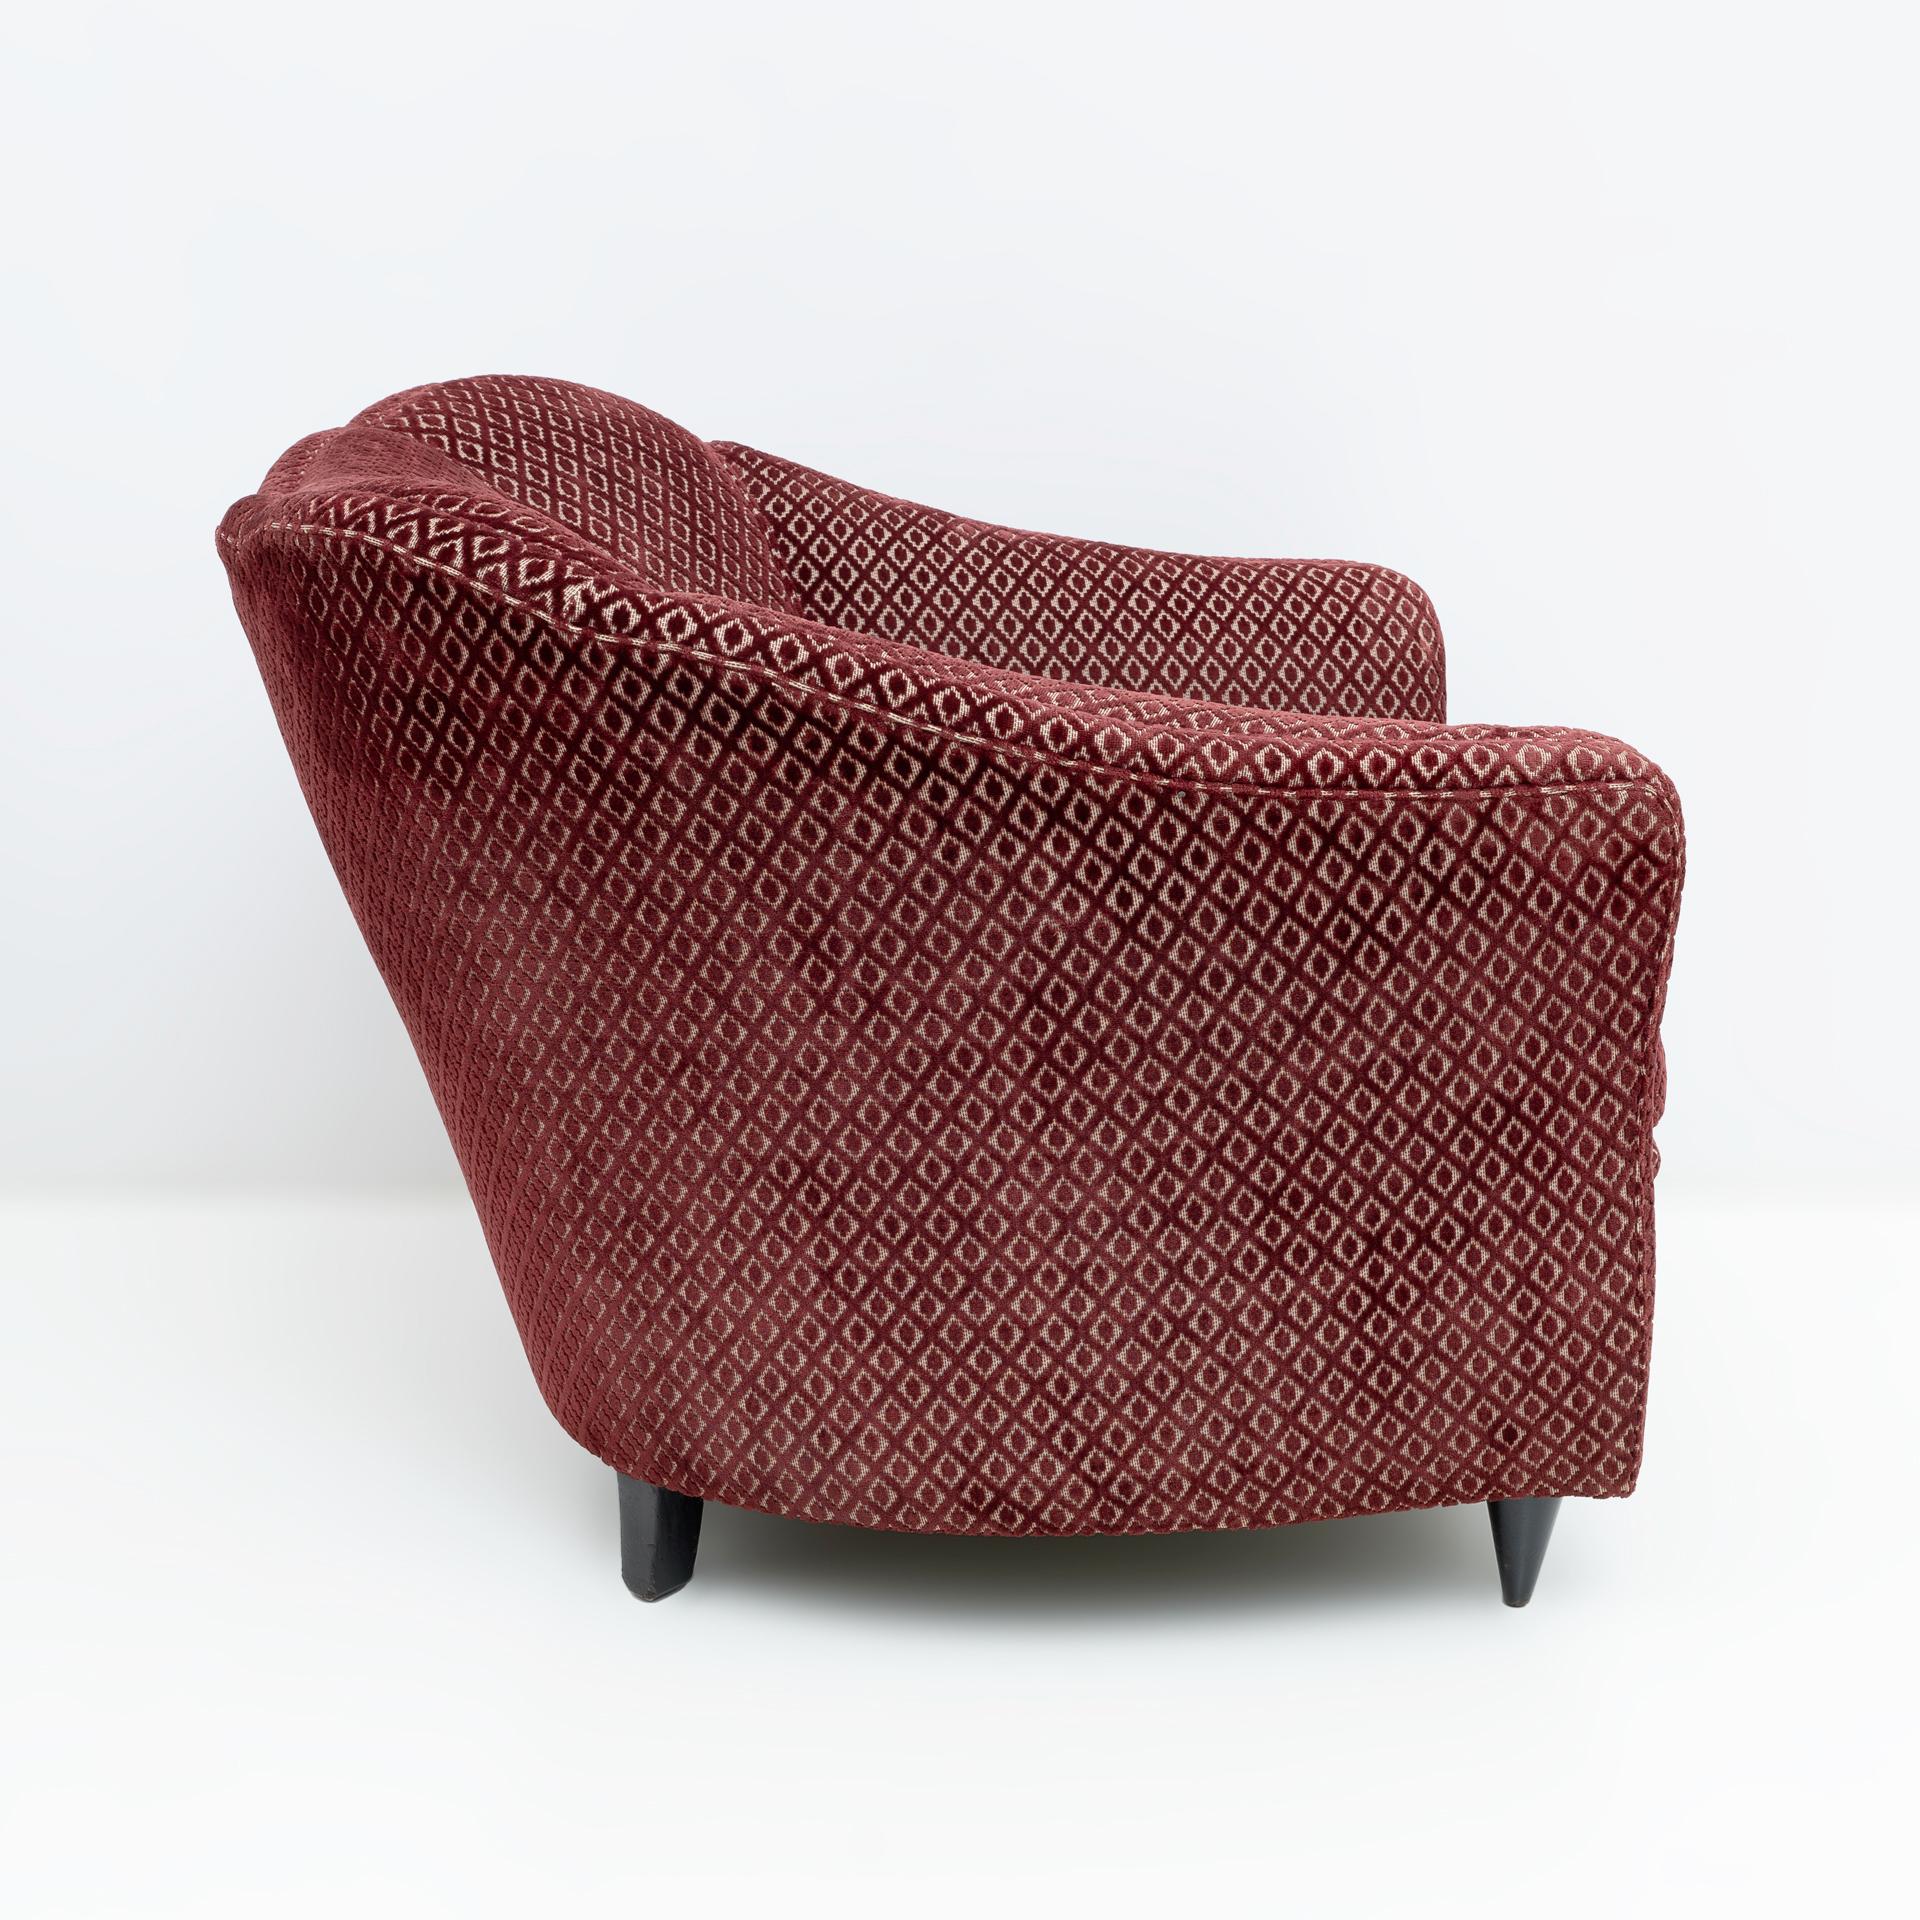 Pair of Gio Ponti Mid-Century Modern Velvet Armchairs for Casa e Giardino, 1950s For Sale 7